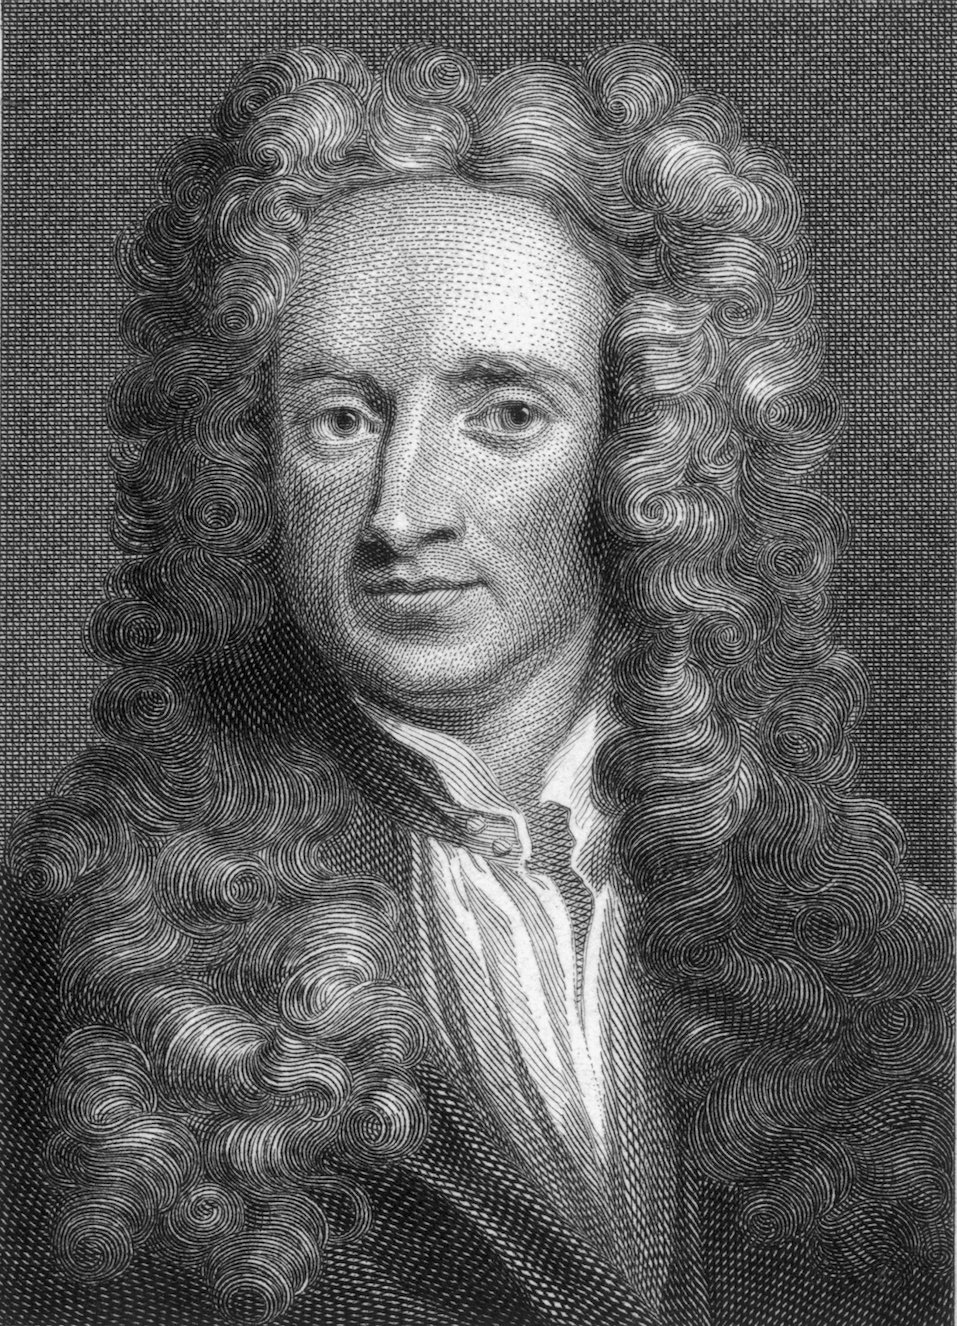 English physicist and mathematician Sir Isaac Newton